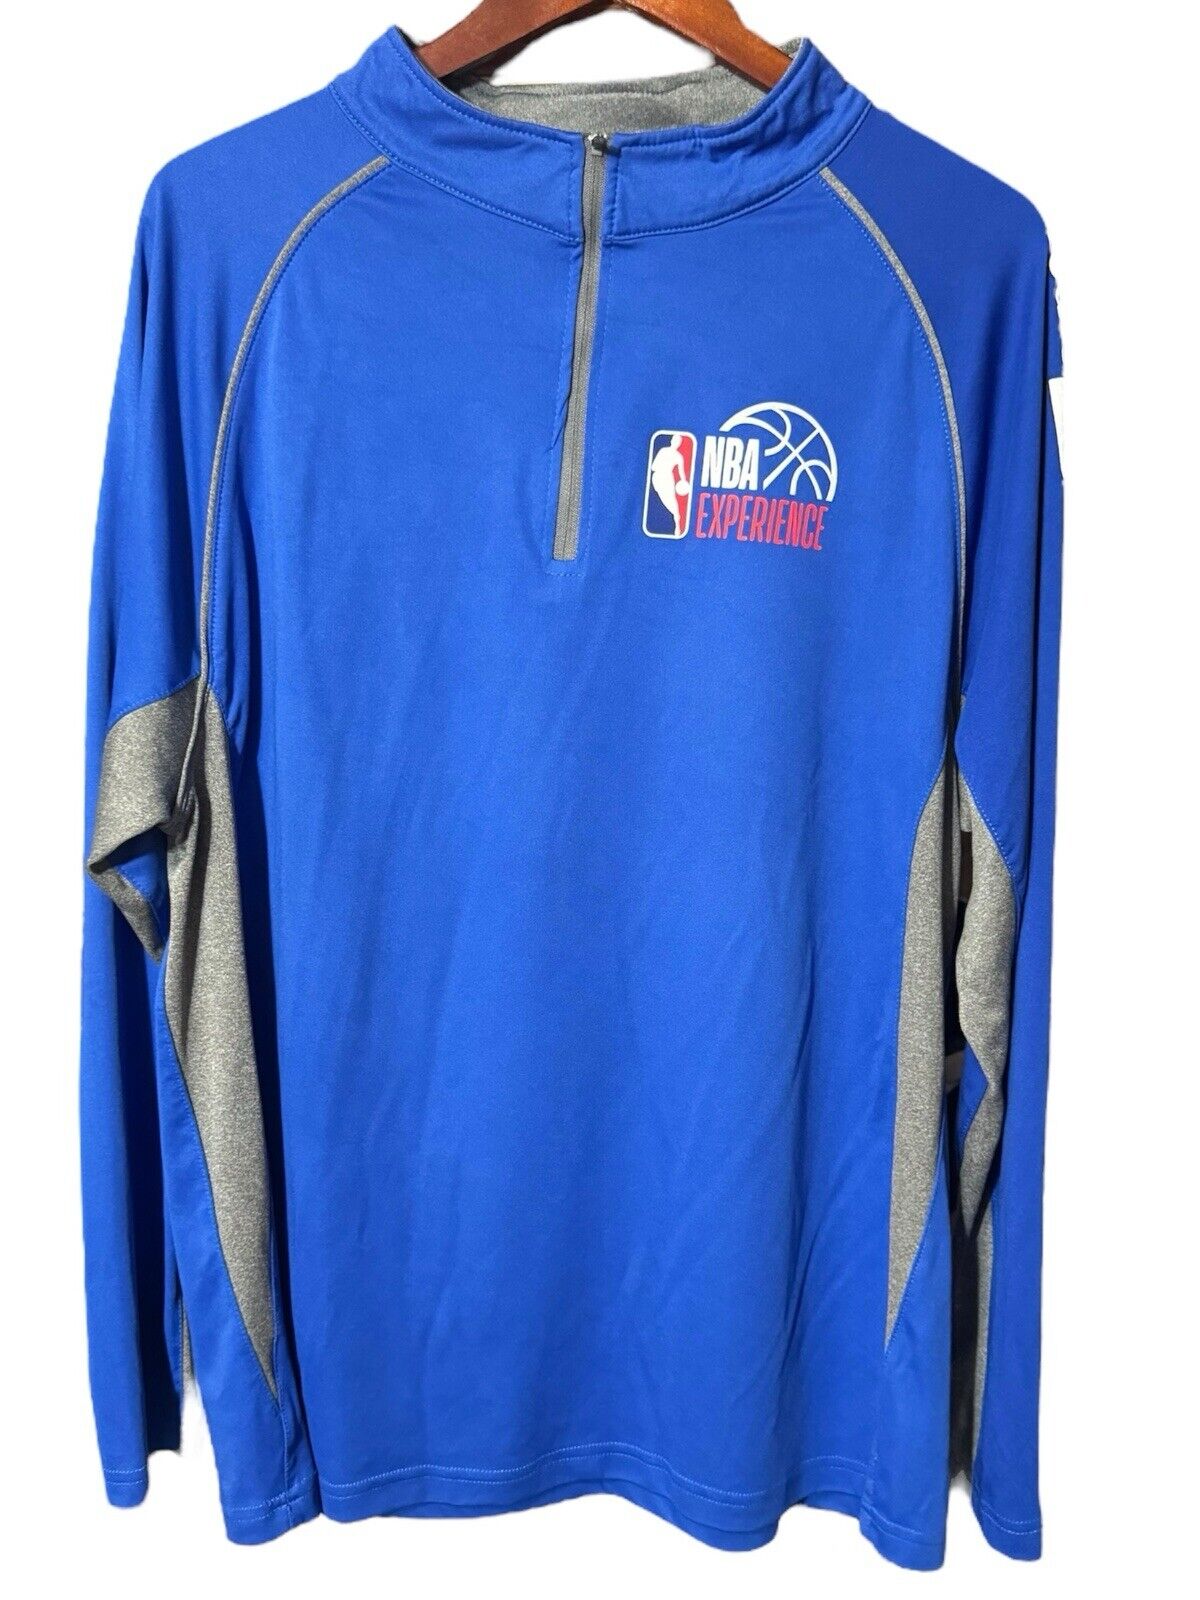 New Era NBA Walt Disney  1/4 Zip Men's XL Shirt Top Jacket Royal Blue And Gray